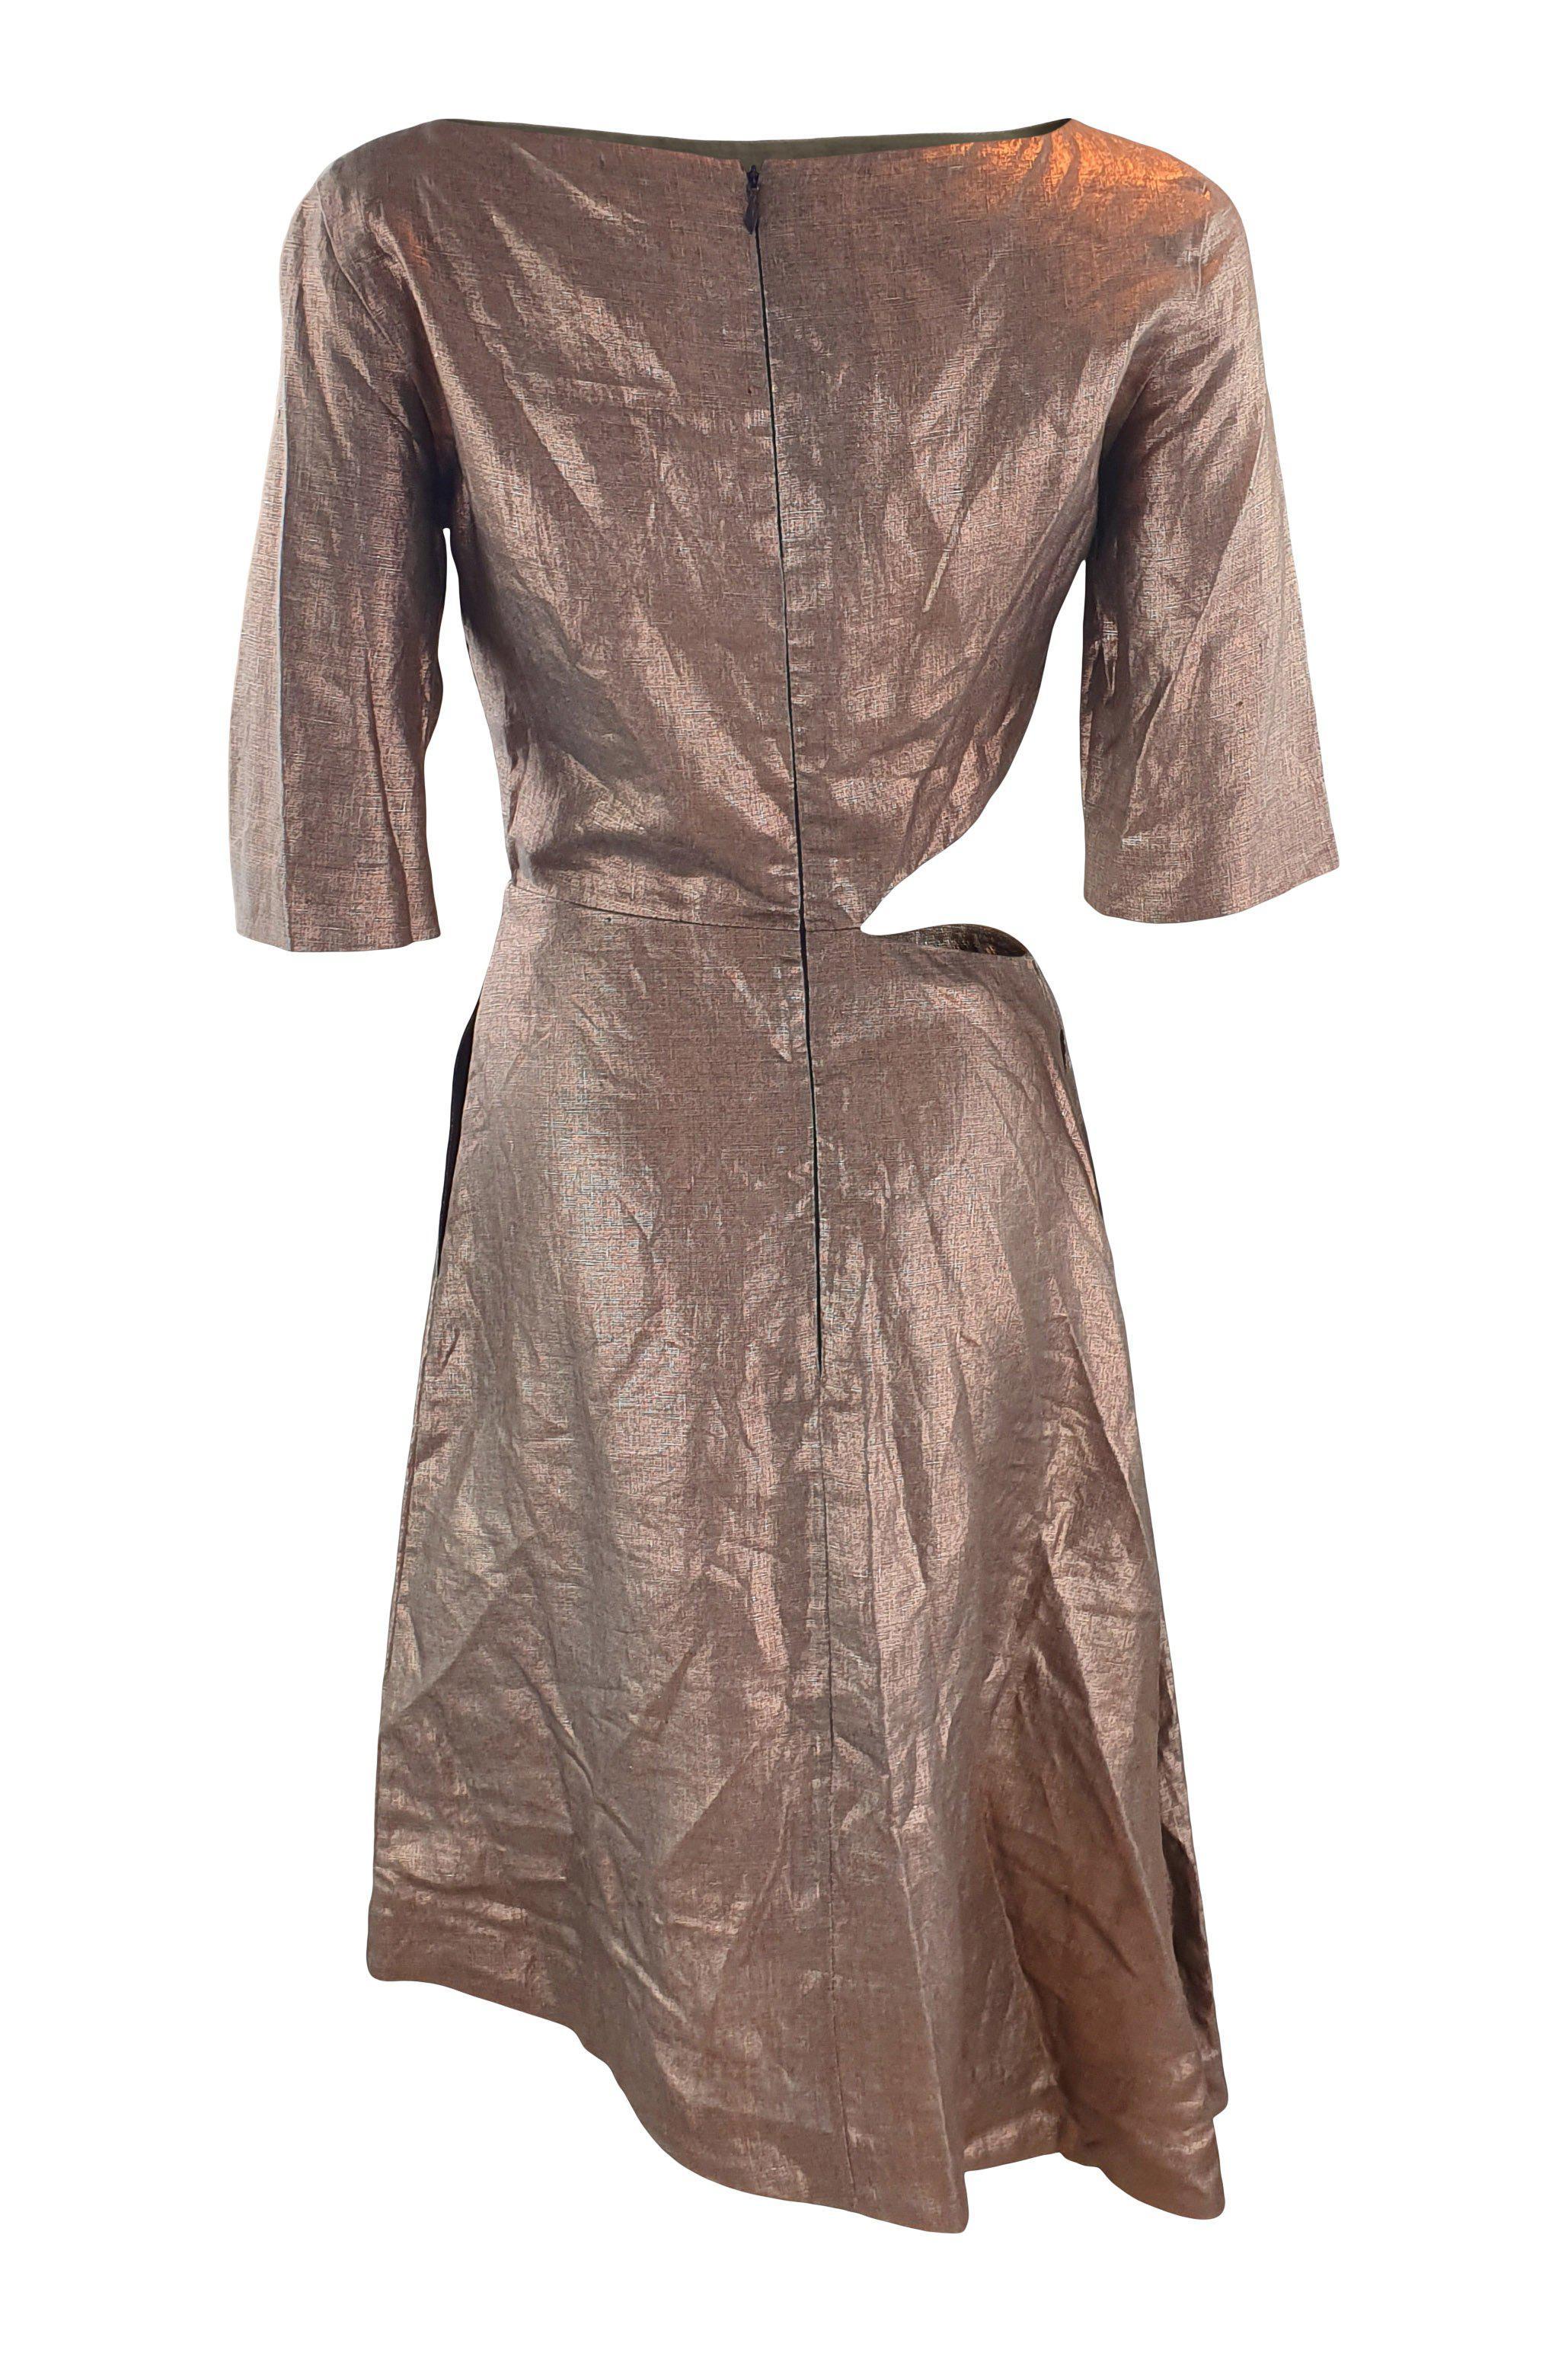 ISA ARFEN Bronze 3/4 Sleeve Cut Out Linen Dress (UK 10)-Isa Arfen-The Freperie